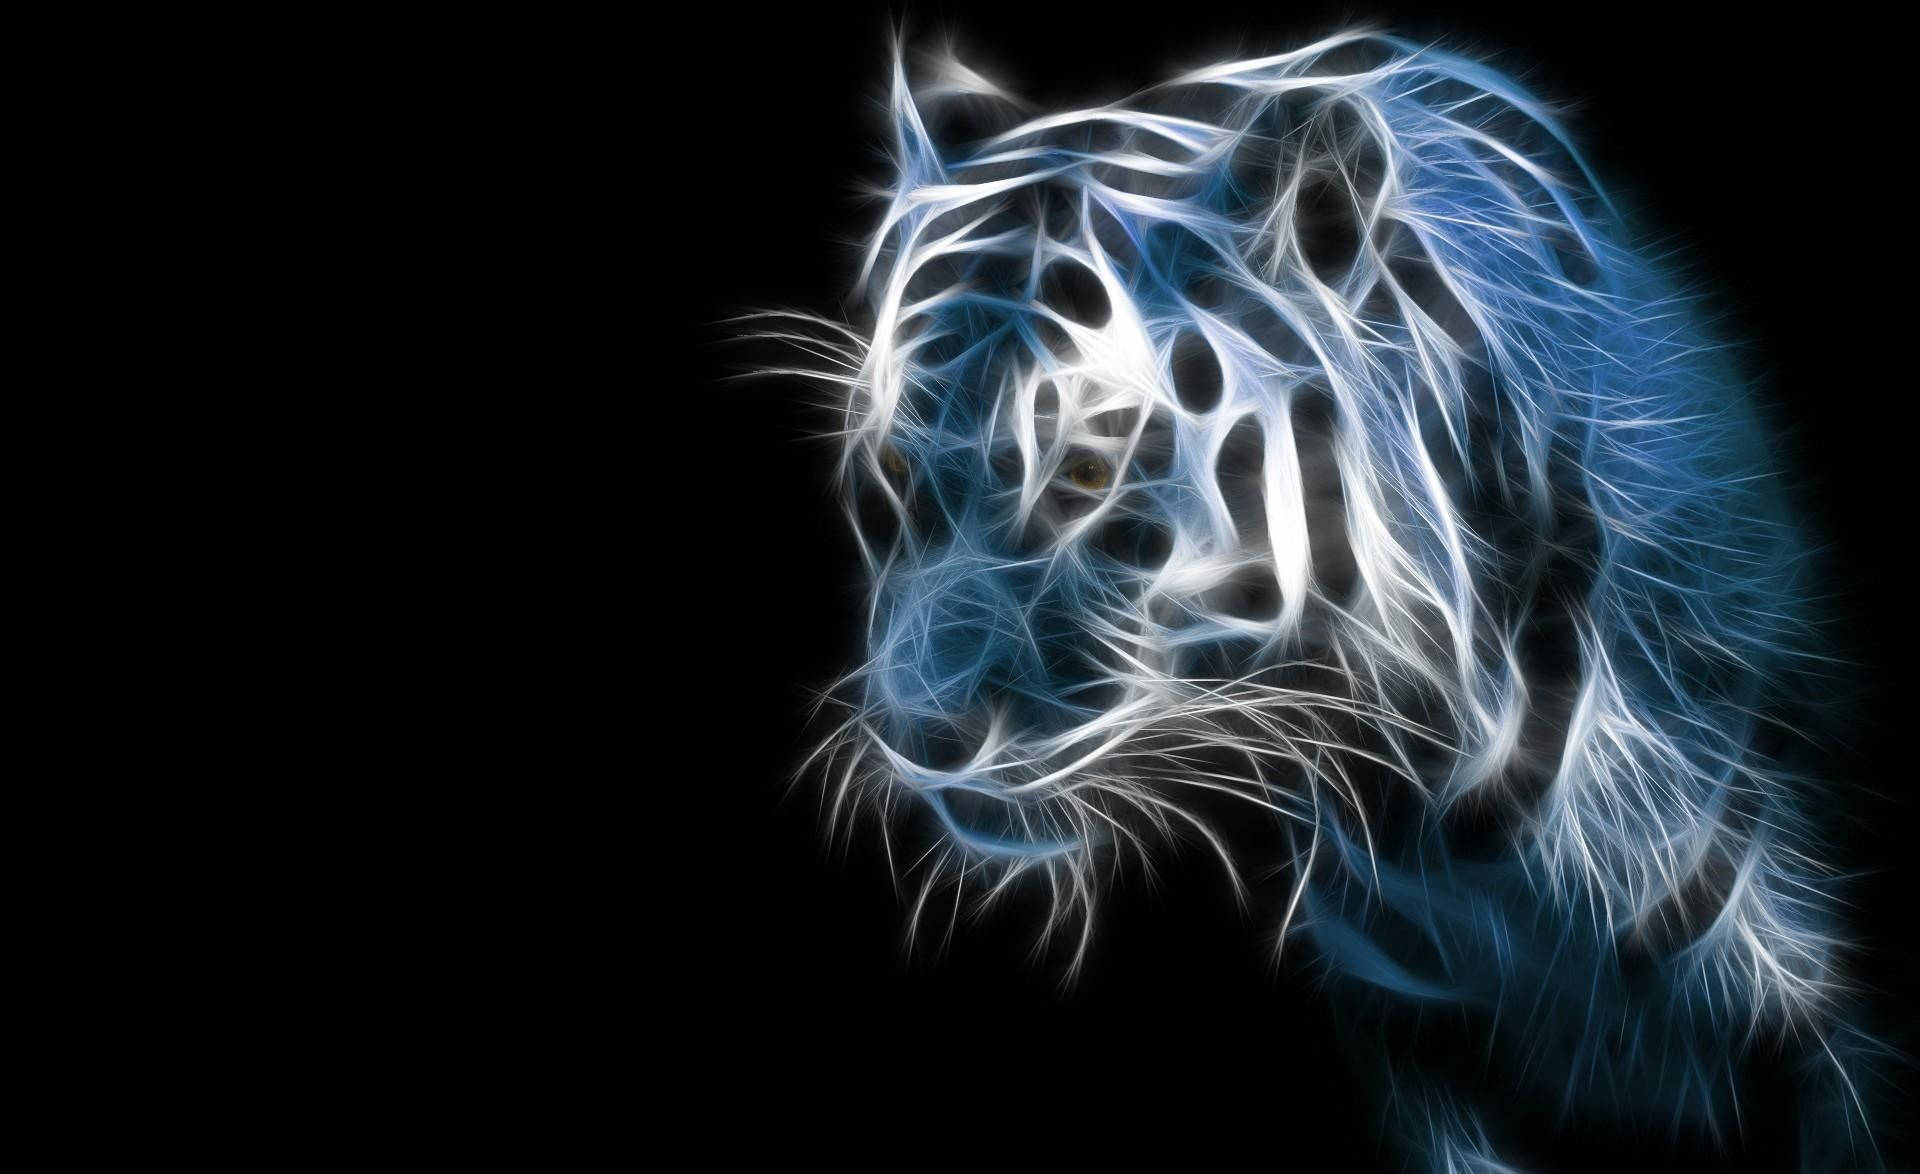 A Gorgeous Cool Glow of Tiger Art Wallpaper